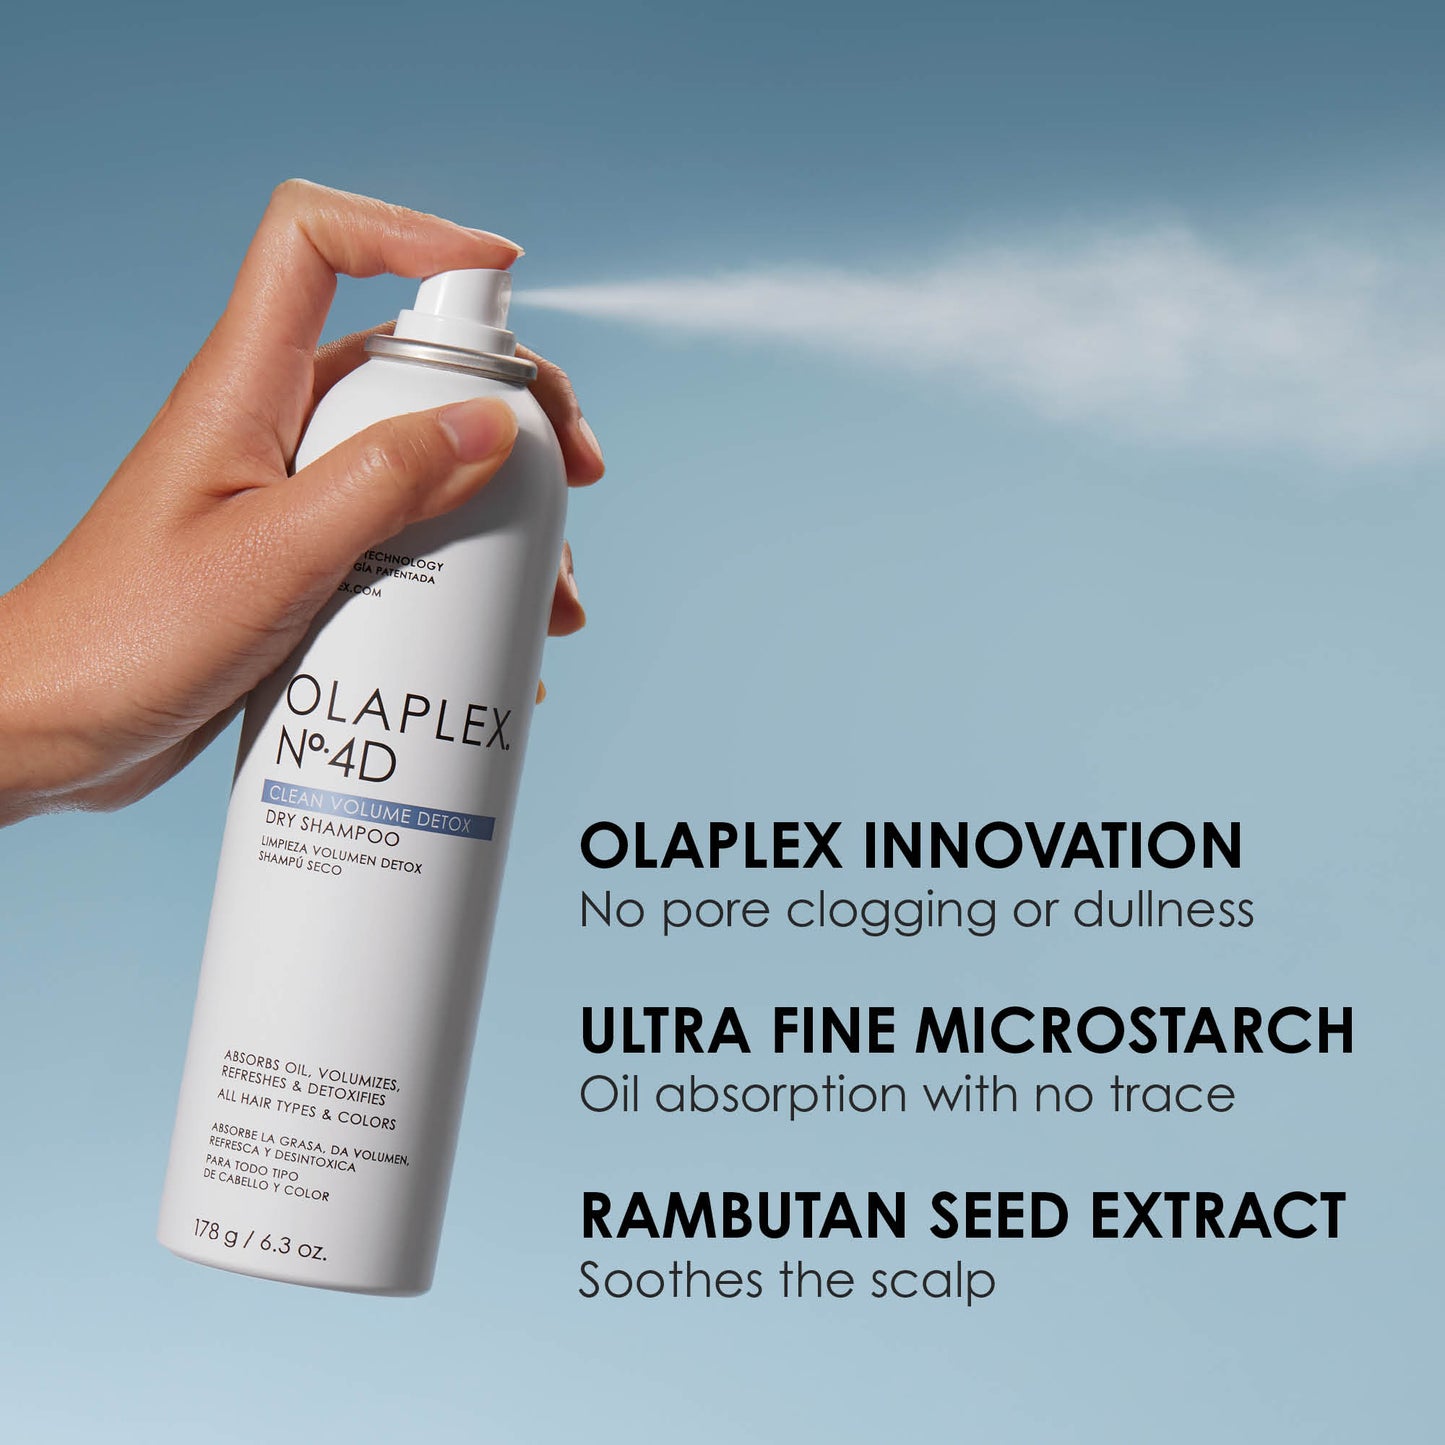 Olaplex - No.4D Clean Volume Detox Dry Shampoo | 178 g